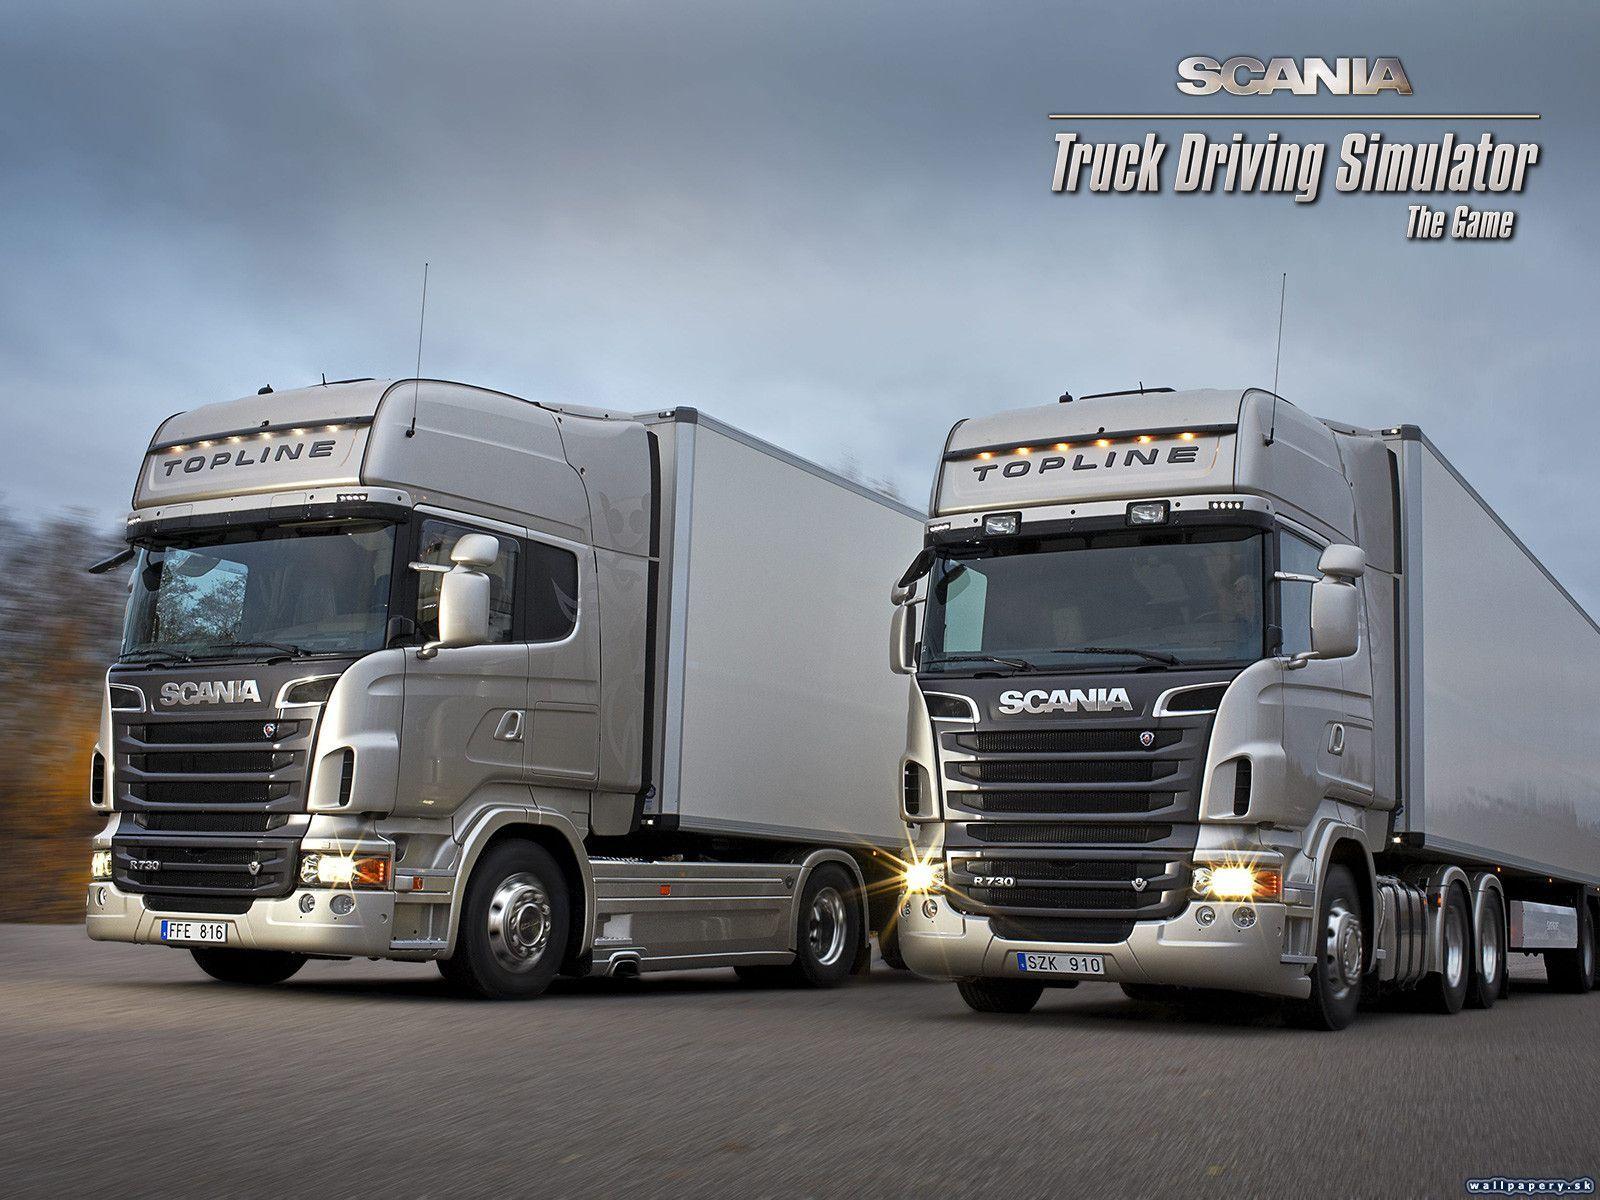 Scania Truck Driving Simulator Wallpaper HD Wallpaper Picture